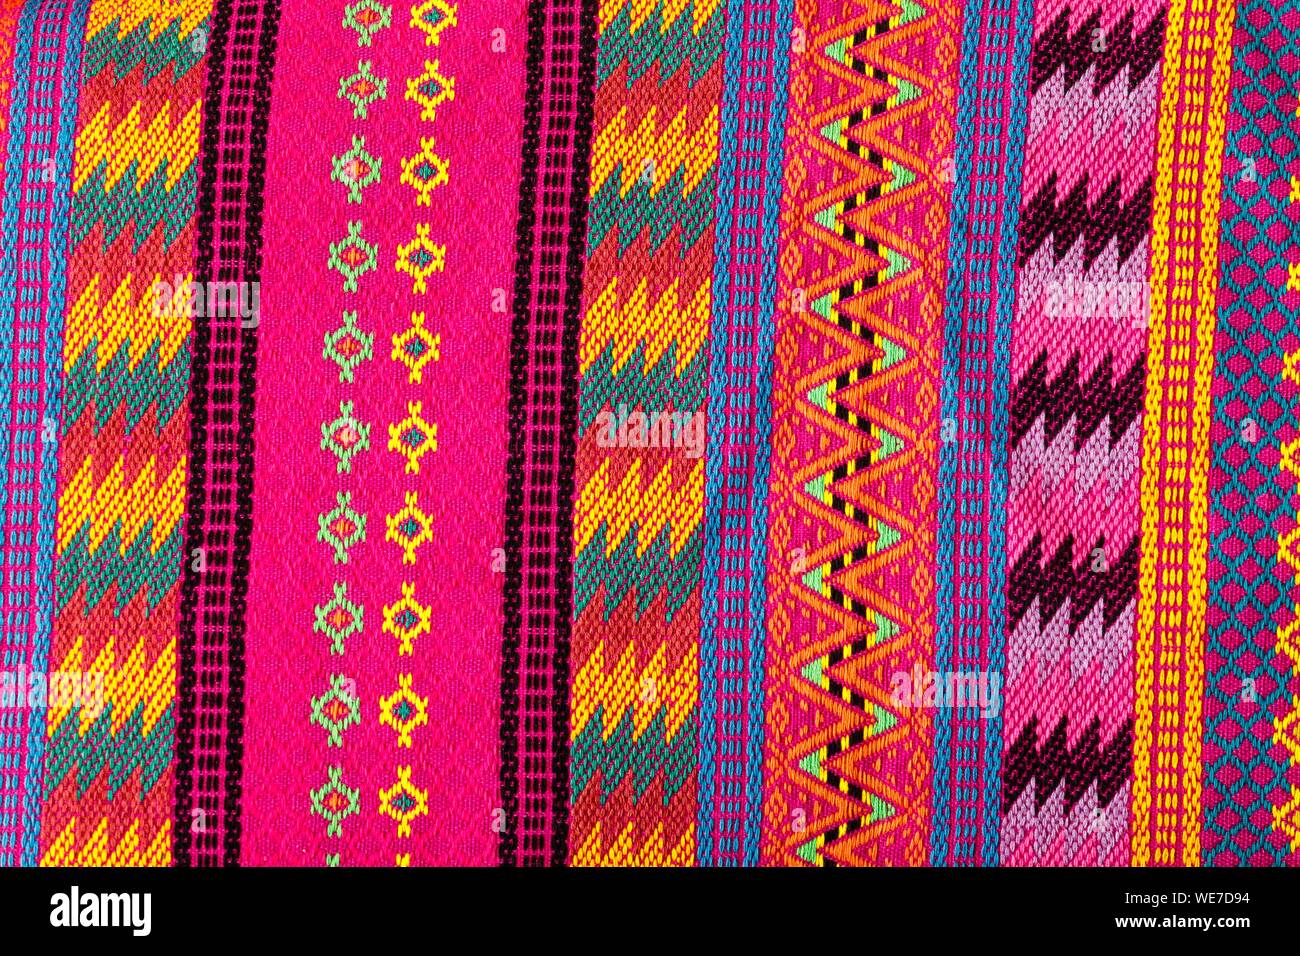 Mexico, Chiapas state, San Cristobal de las Casas, Tzotzil handicraft, hand woven Stock Photo